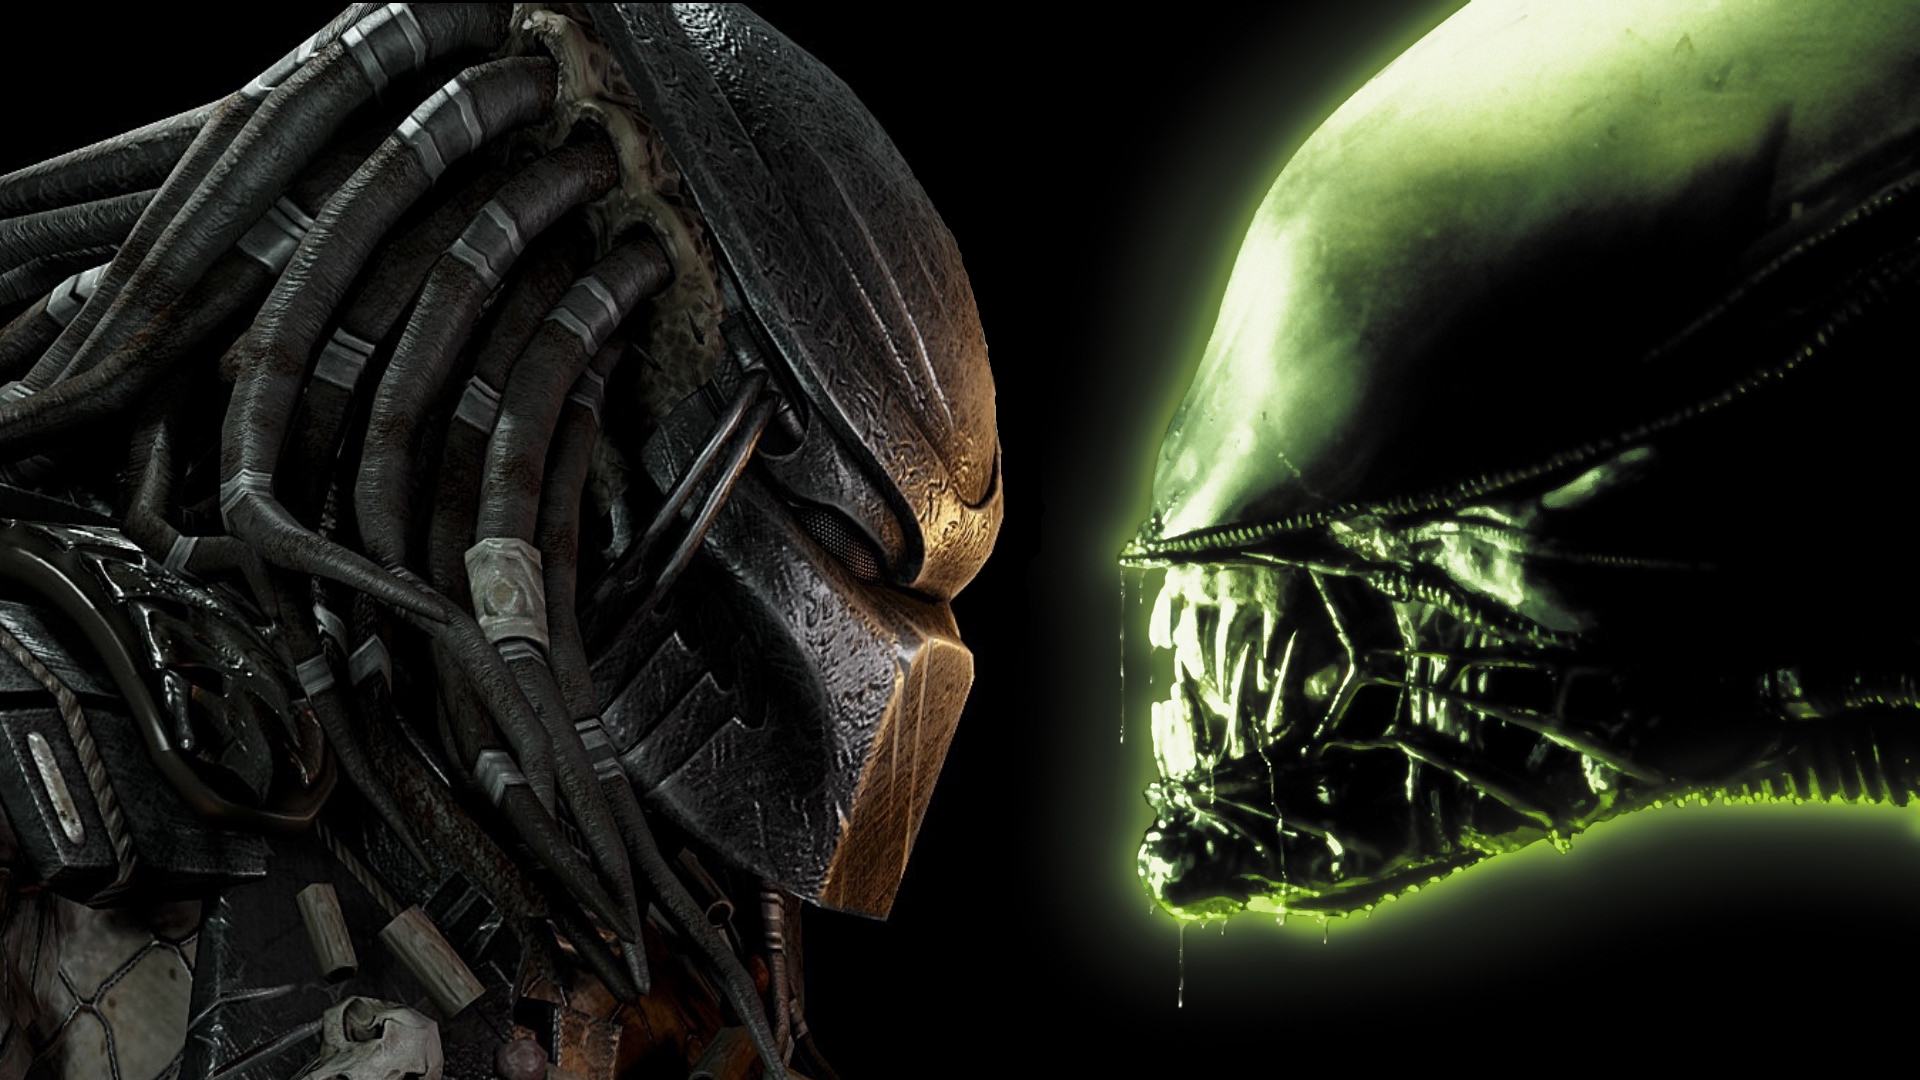 Aliens vs predators ultimate prey features original avp stories